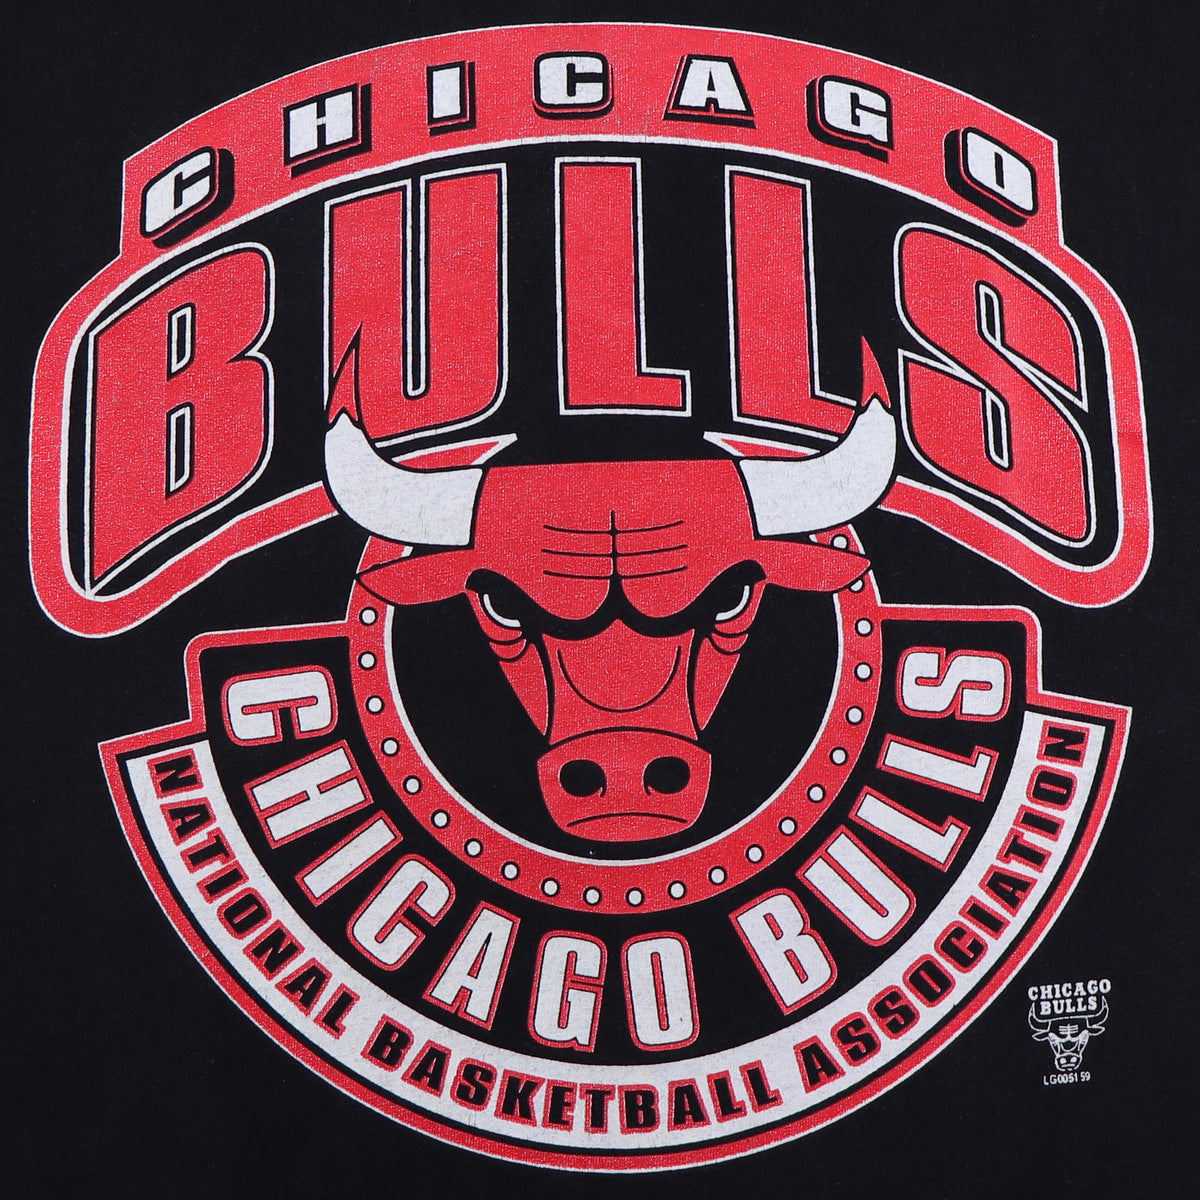 Vintage Red 1990s Chicago Bulls Tshirt - L